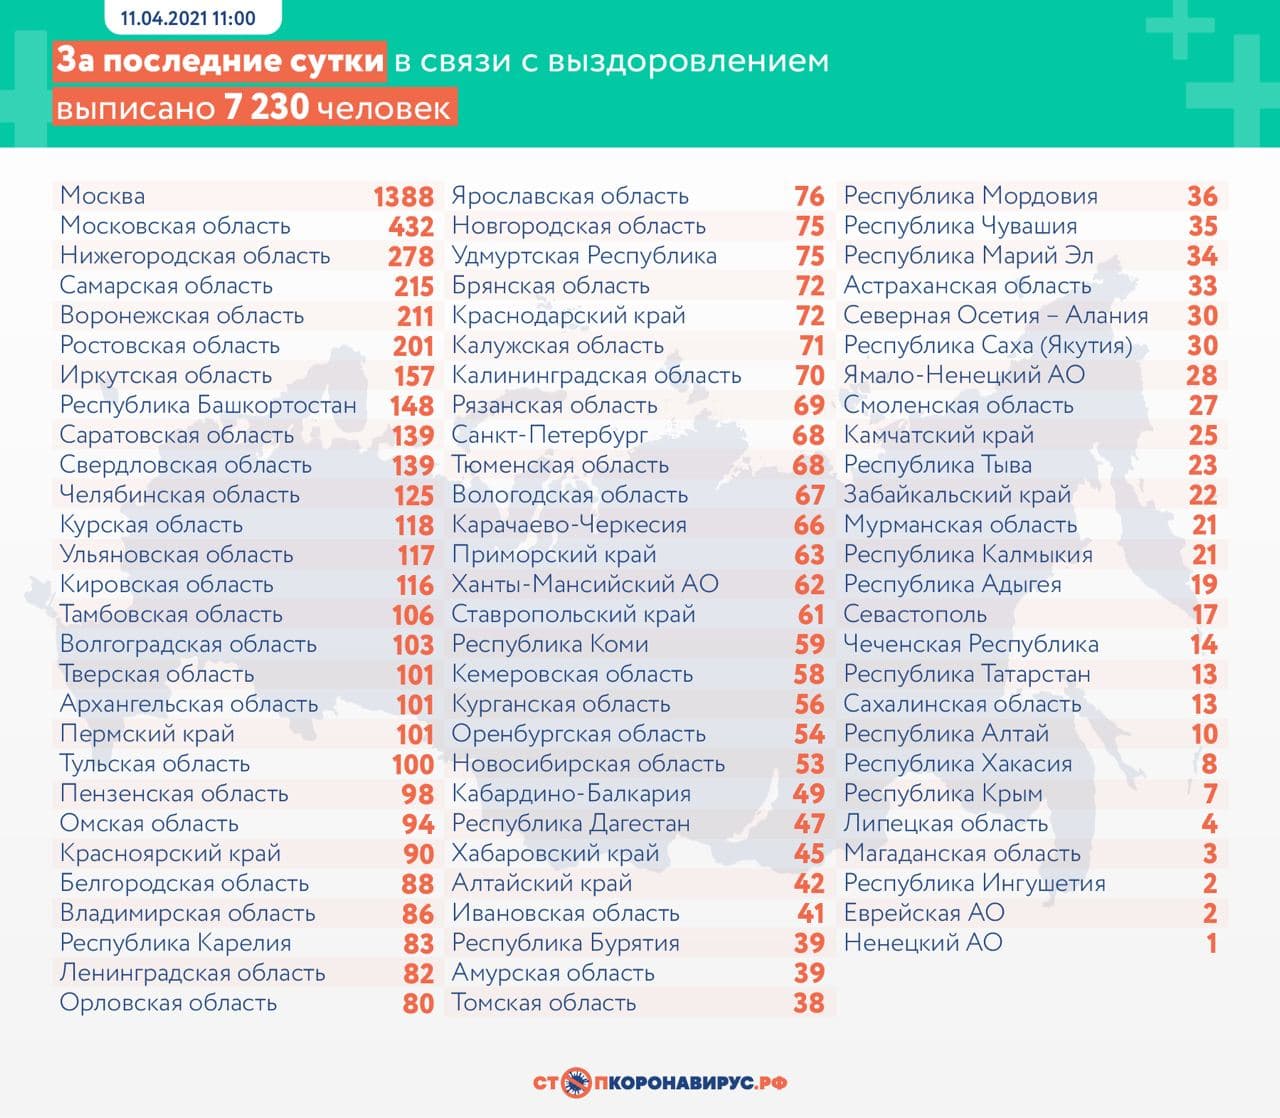 Оперативная статистика по коронавирусу в России на 11 апреля